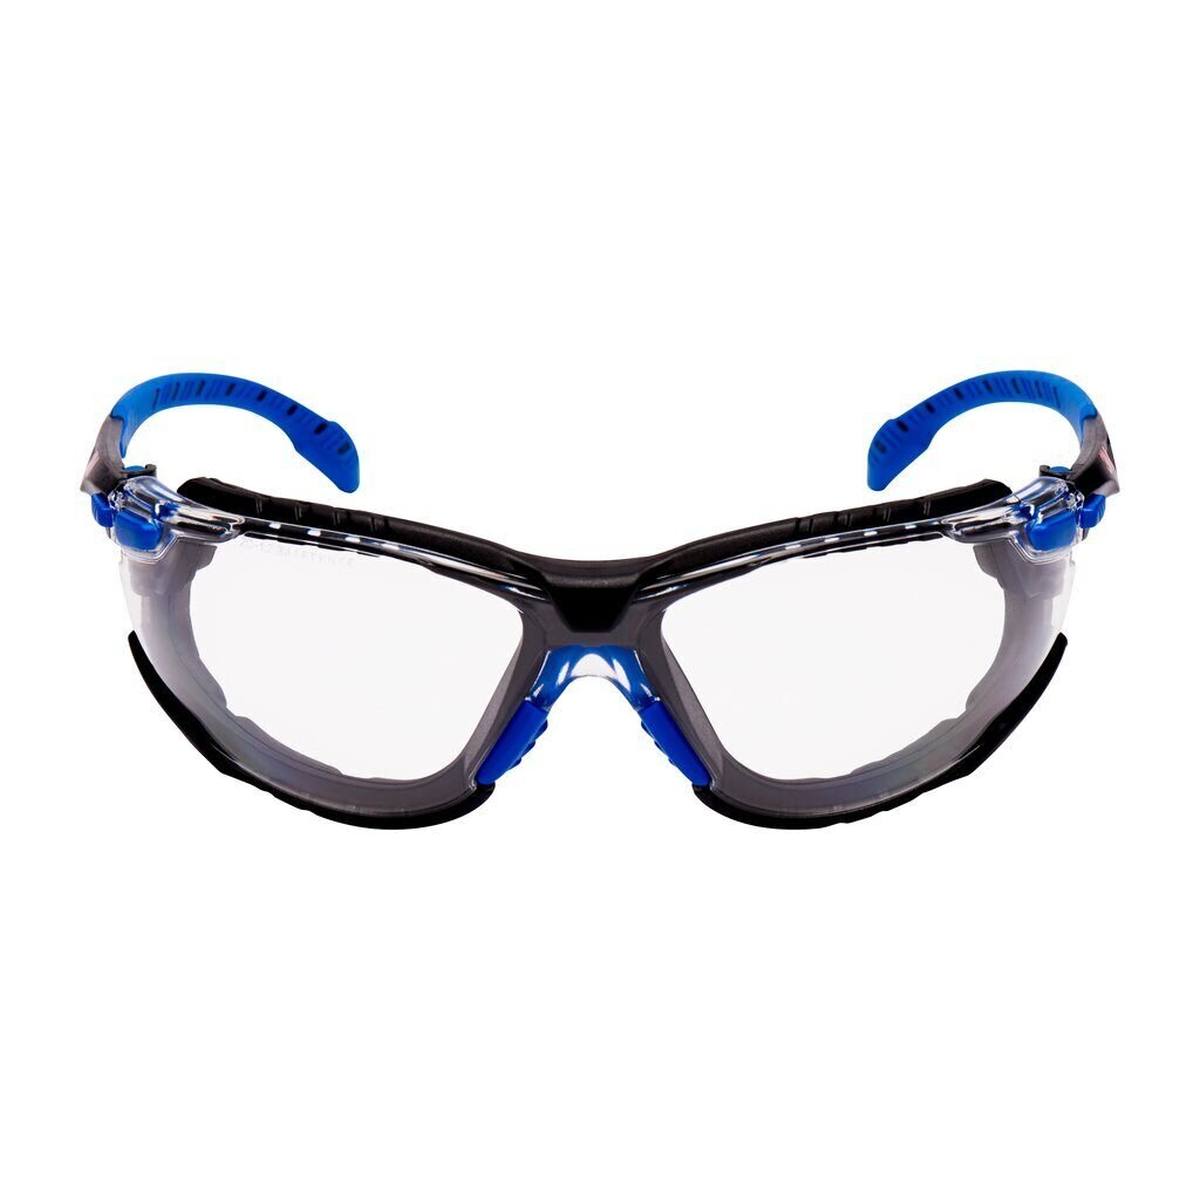 3M Solus 1000 safety spectacles, blue/black temples, Scotchgard anti-fog/anti-scratch coating (K&amp;N), clear lens, foam frame and headband, S1101SGAFKT-EU